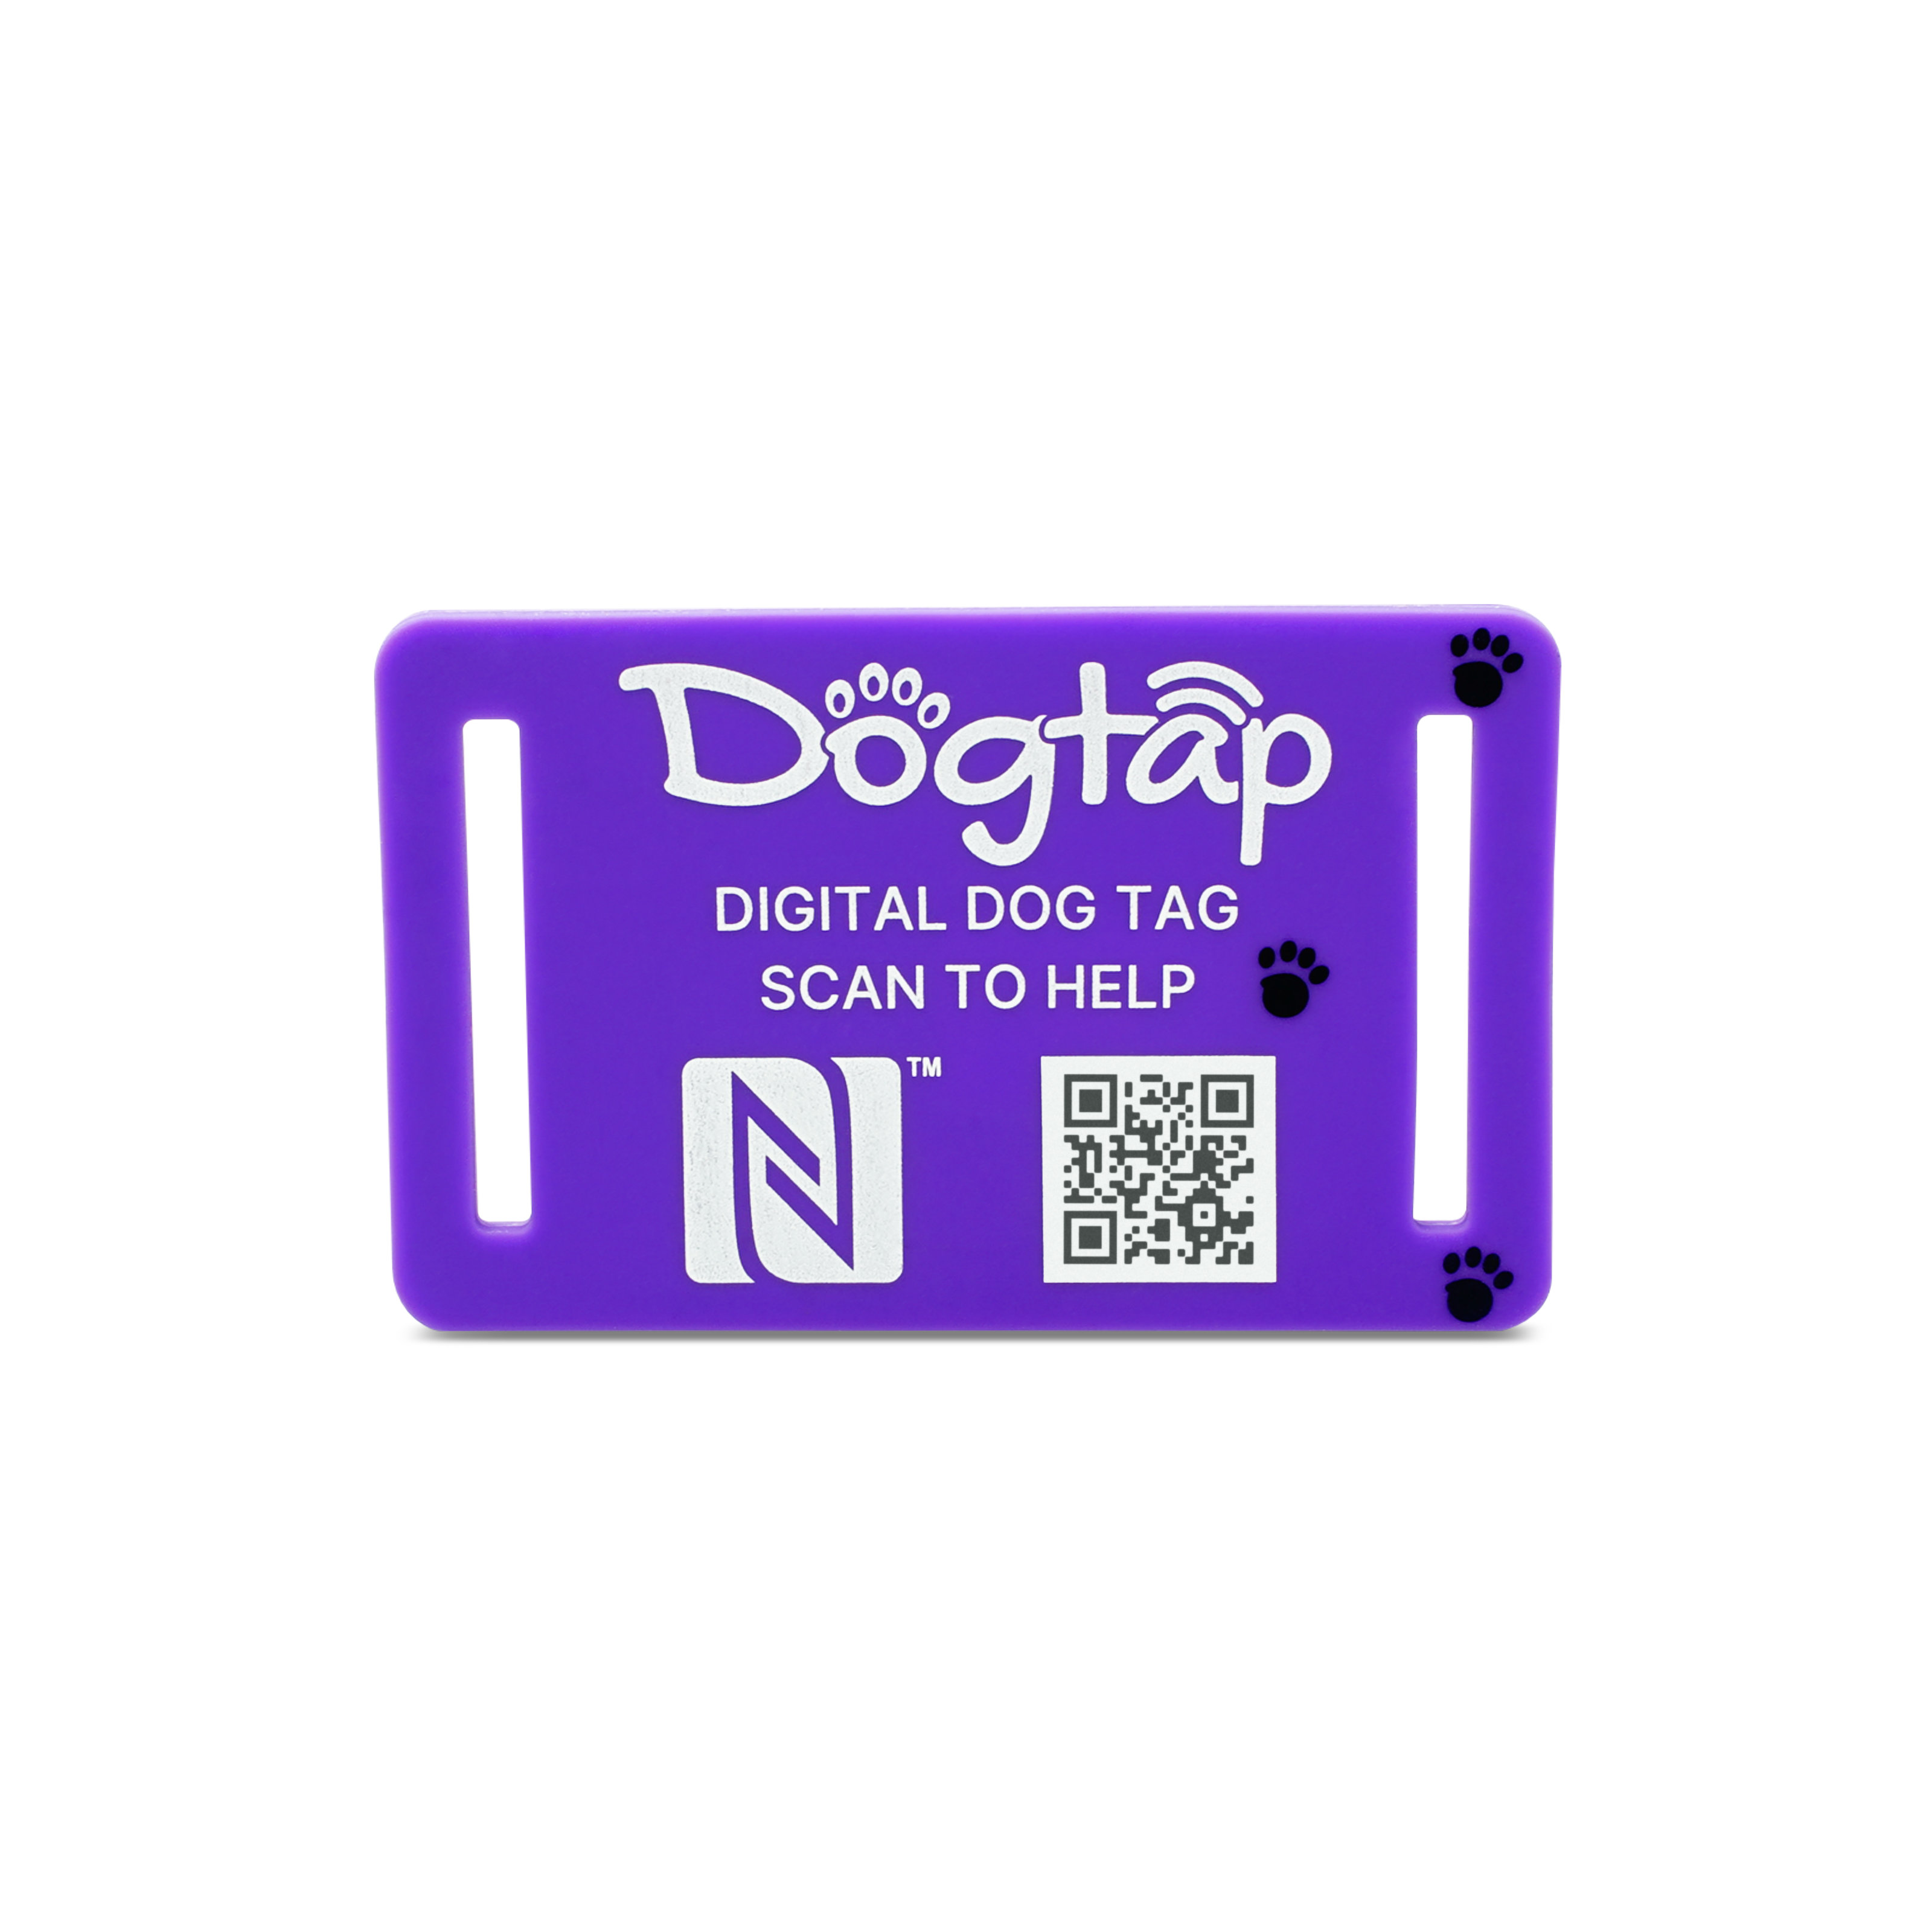 Dogtap Light Big - Digitale Hundemarke - Silikon - 67 x 40 mm - lila